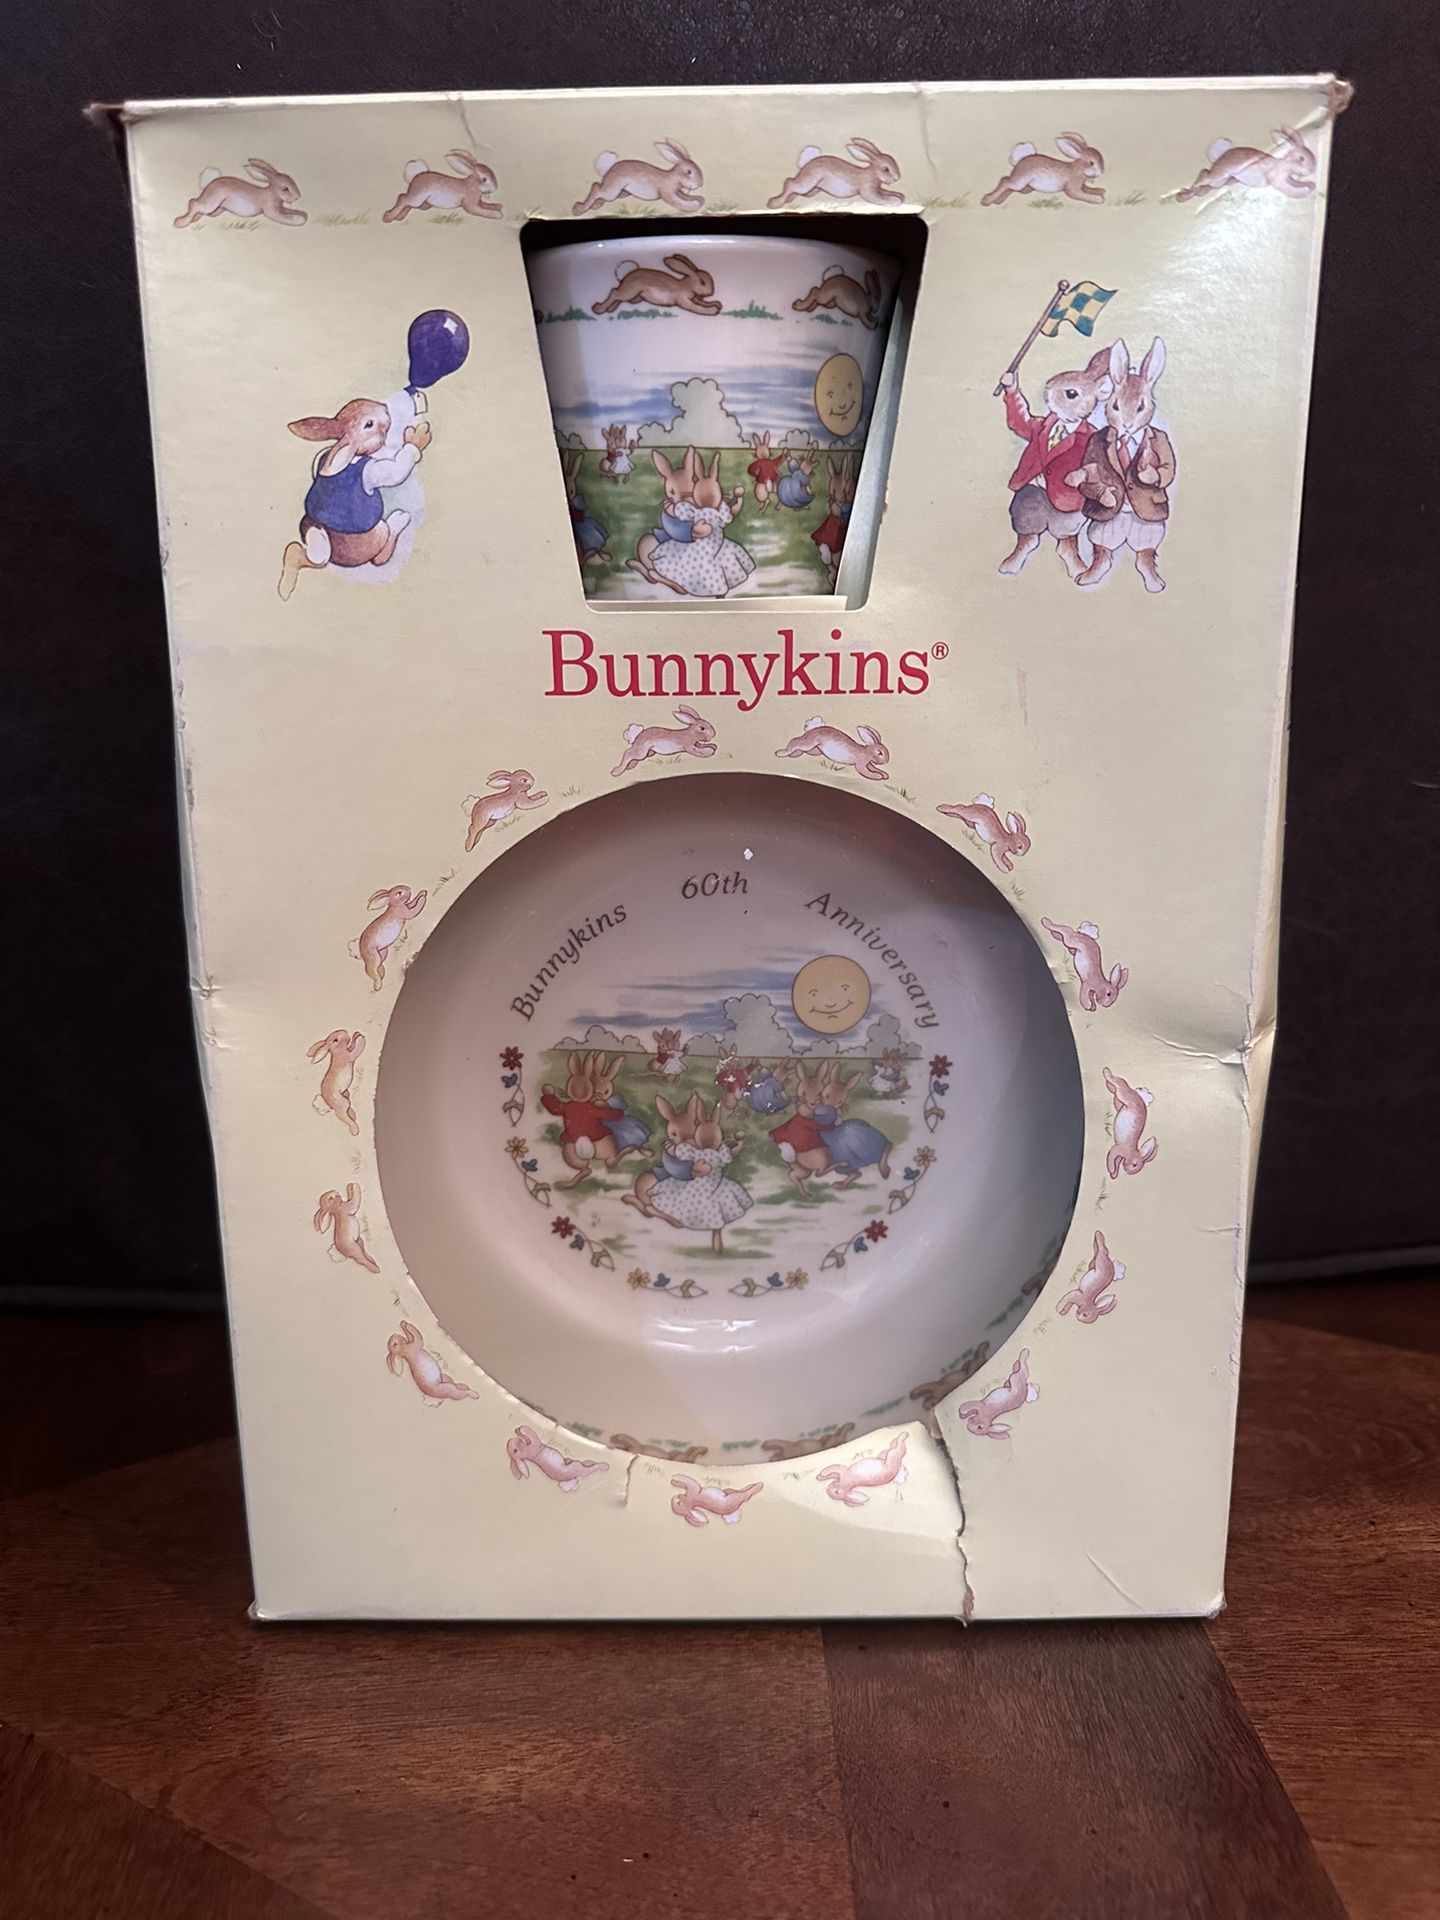 Royal Doulton Bunnykins 60th Anniversay Plate and Mug - Brand New